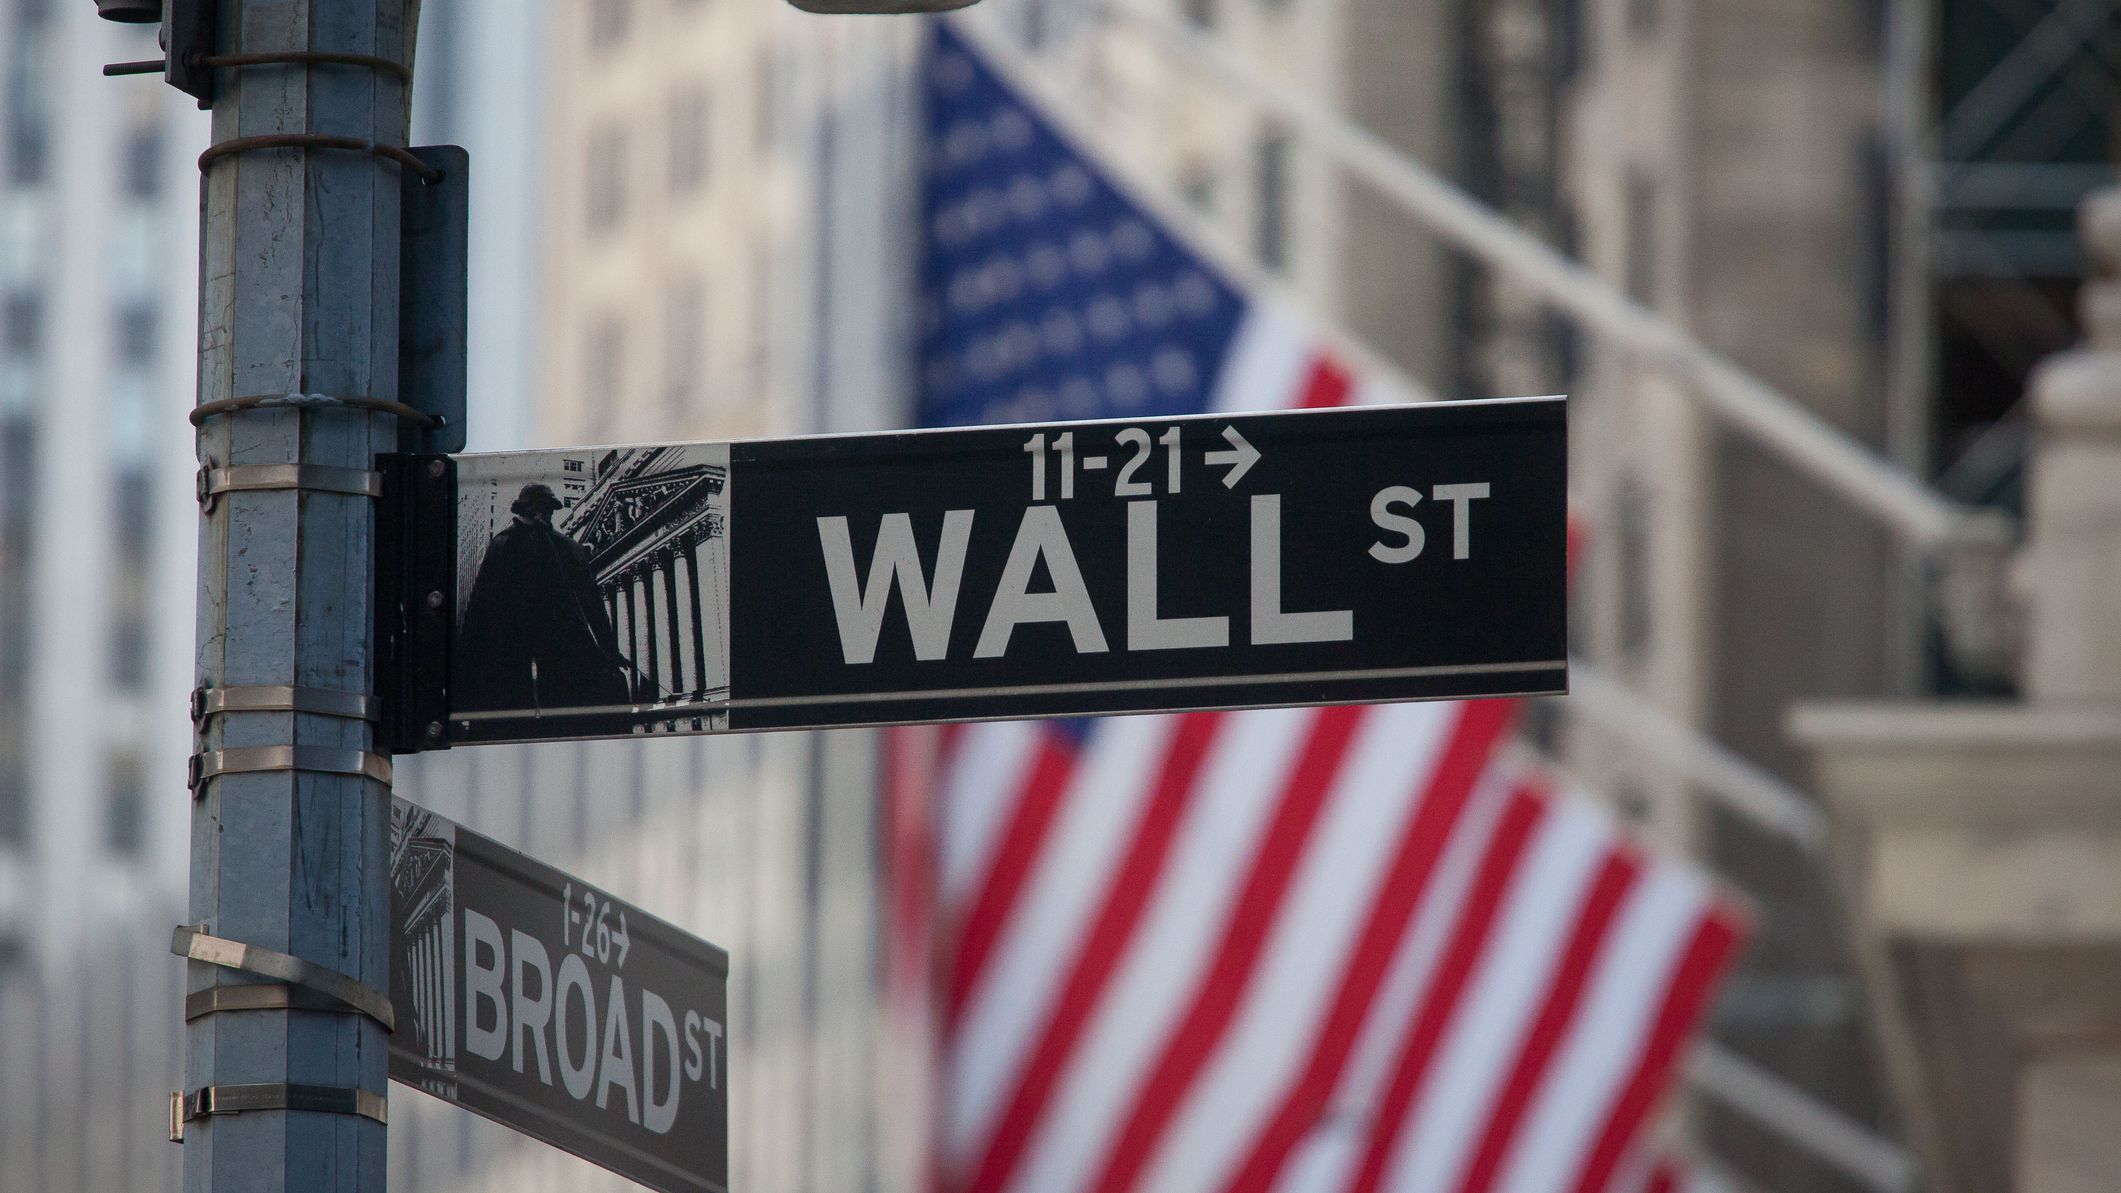 Wall Street: Νέα ρεκόρ για S&P 500 και Nasdaq